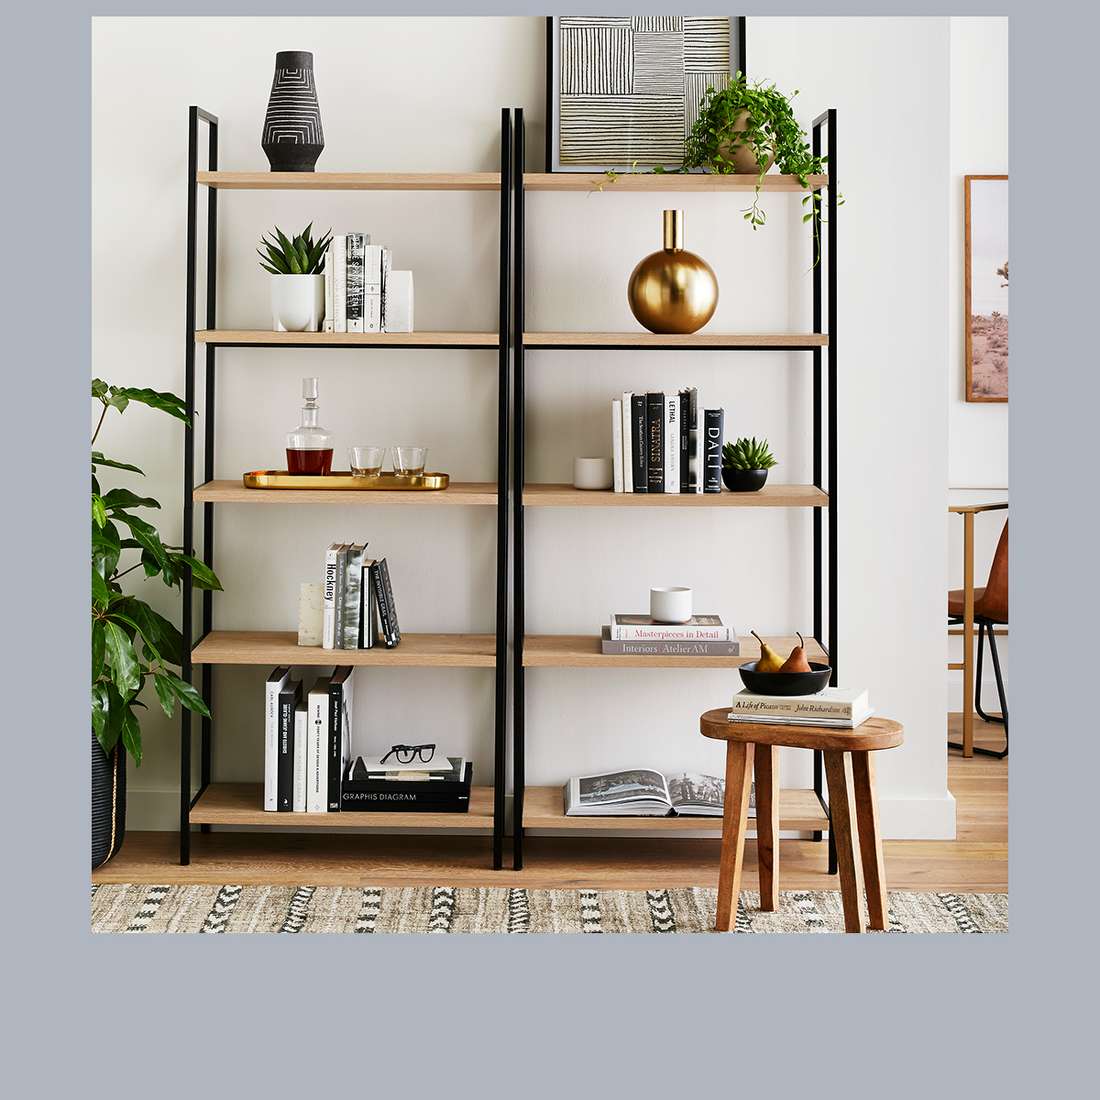 Home Office Design Ideas Inspiration, Office Bookcase Decor Ideas